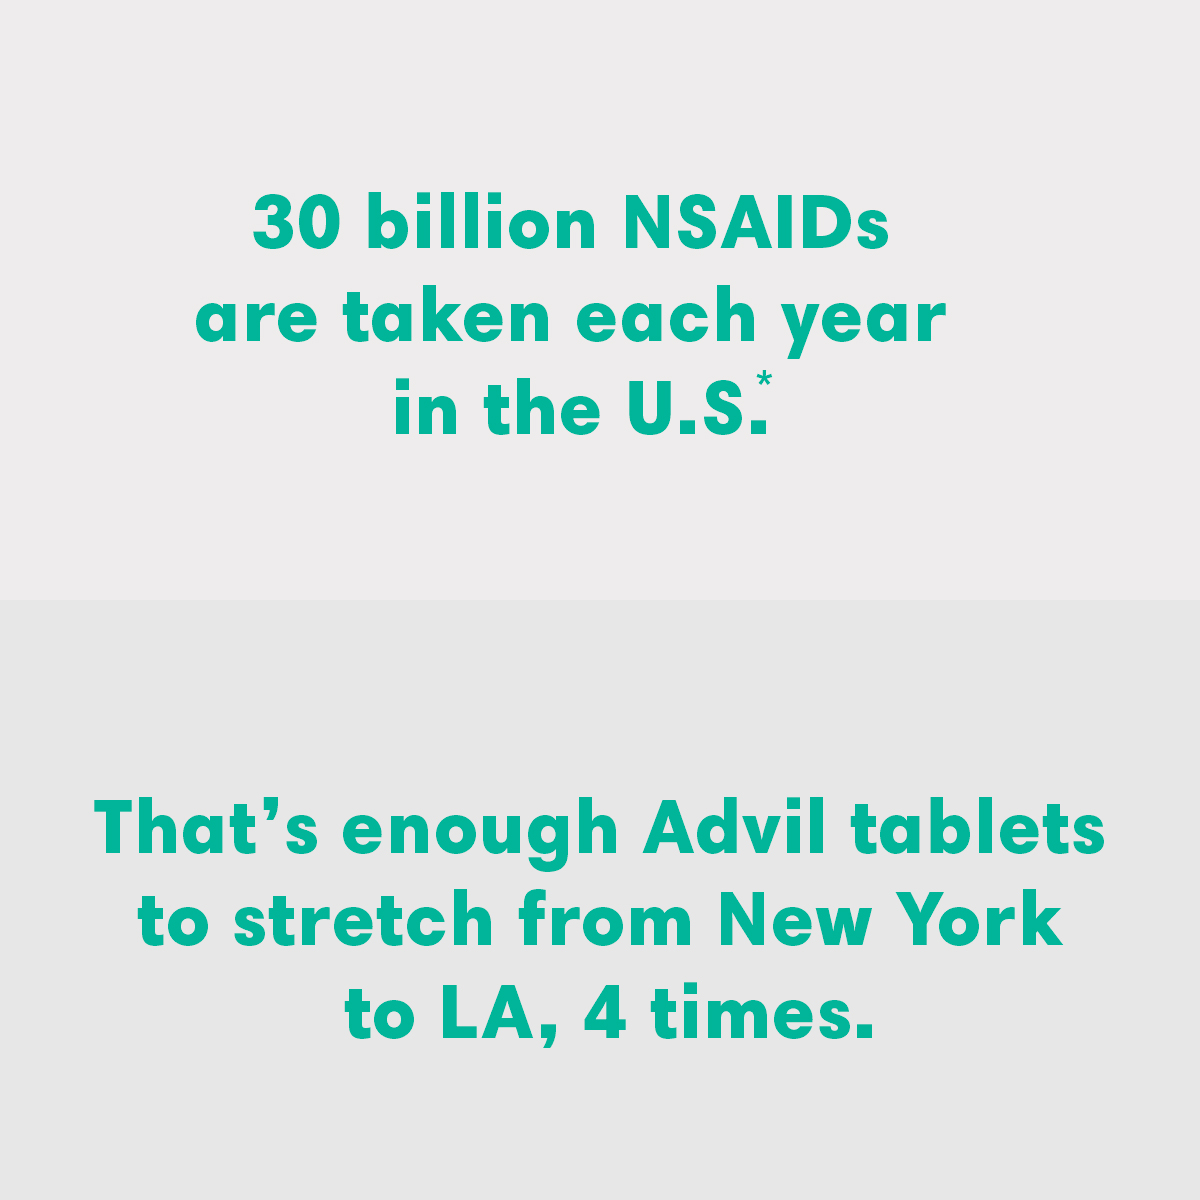 30 billion NSAIDs